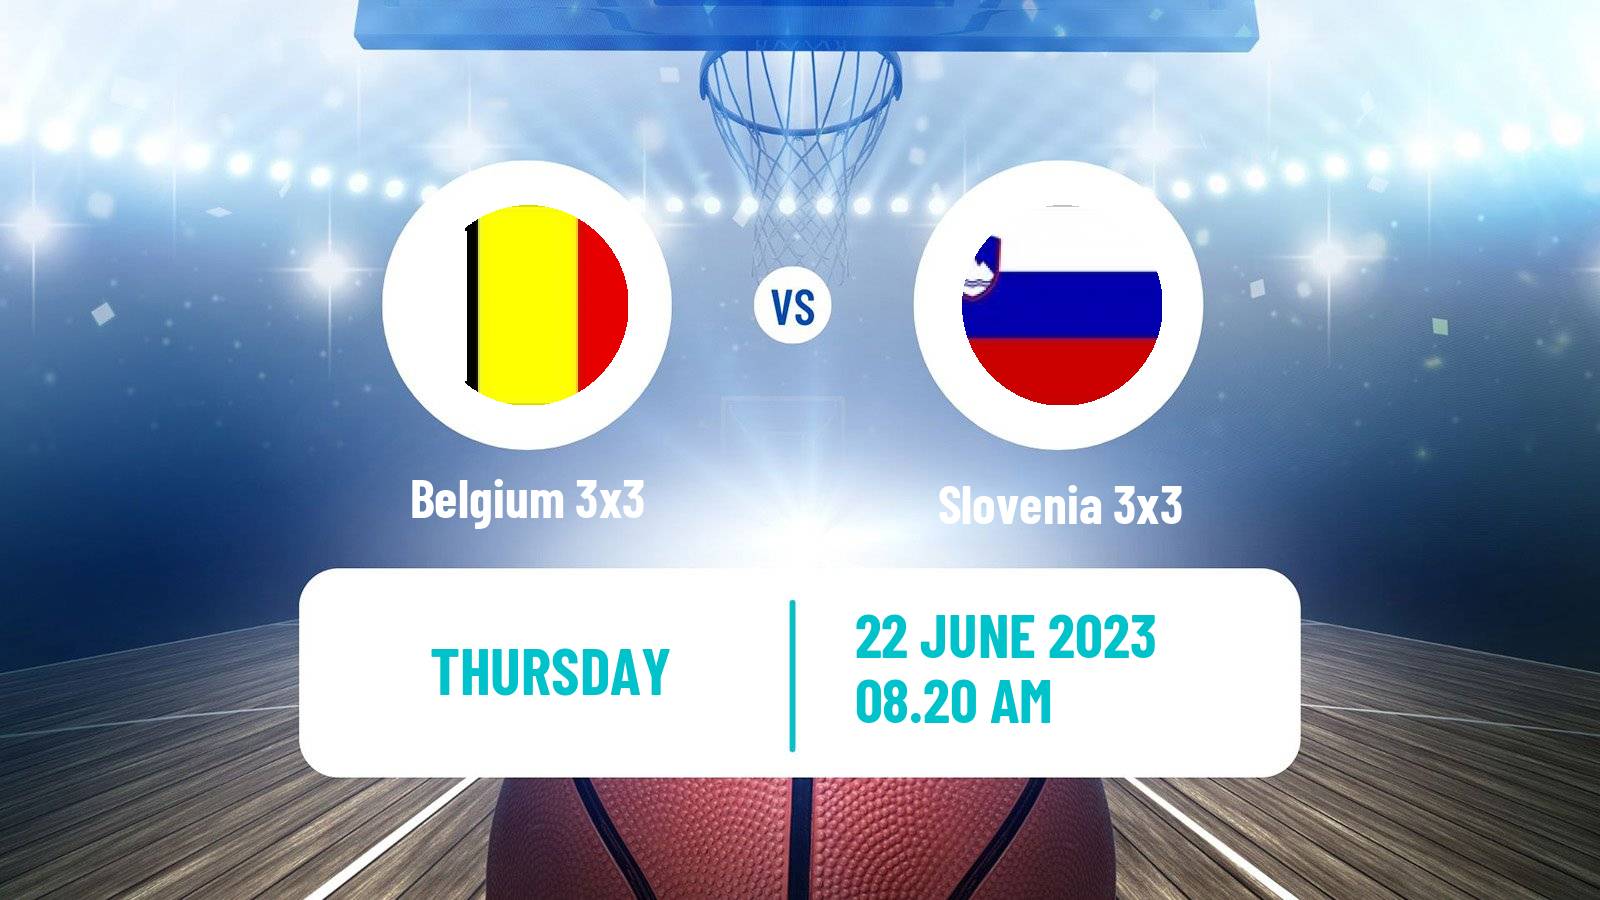 Basketball European Games 3x3  Belgium 3x3 - Slovenia 3x3